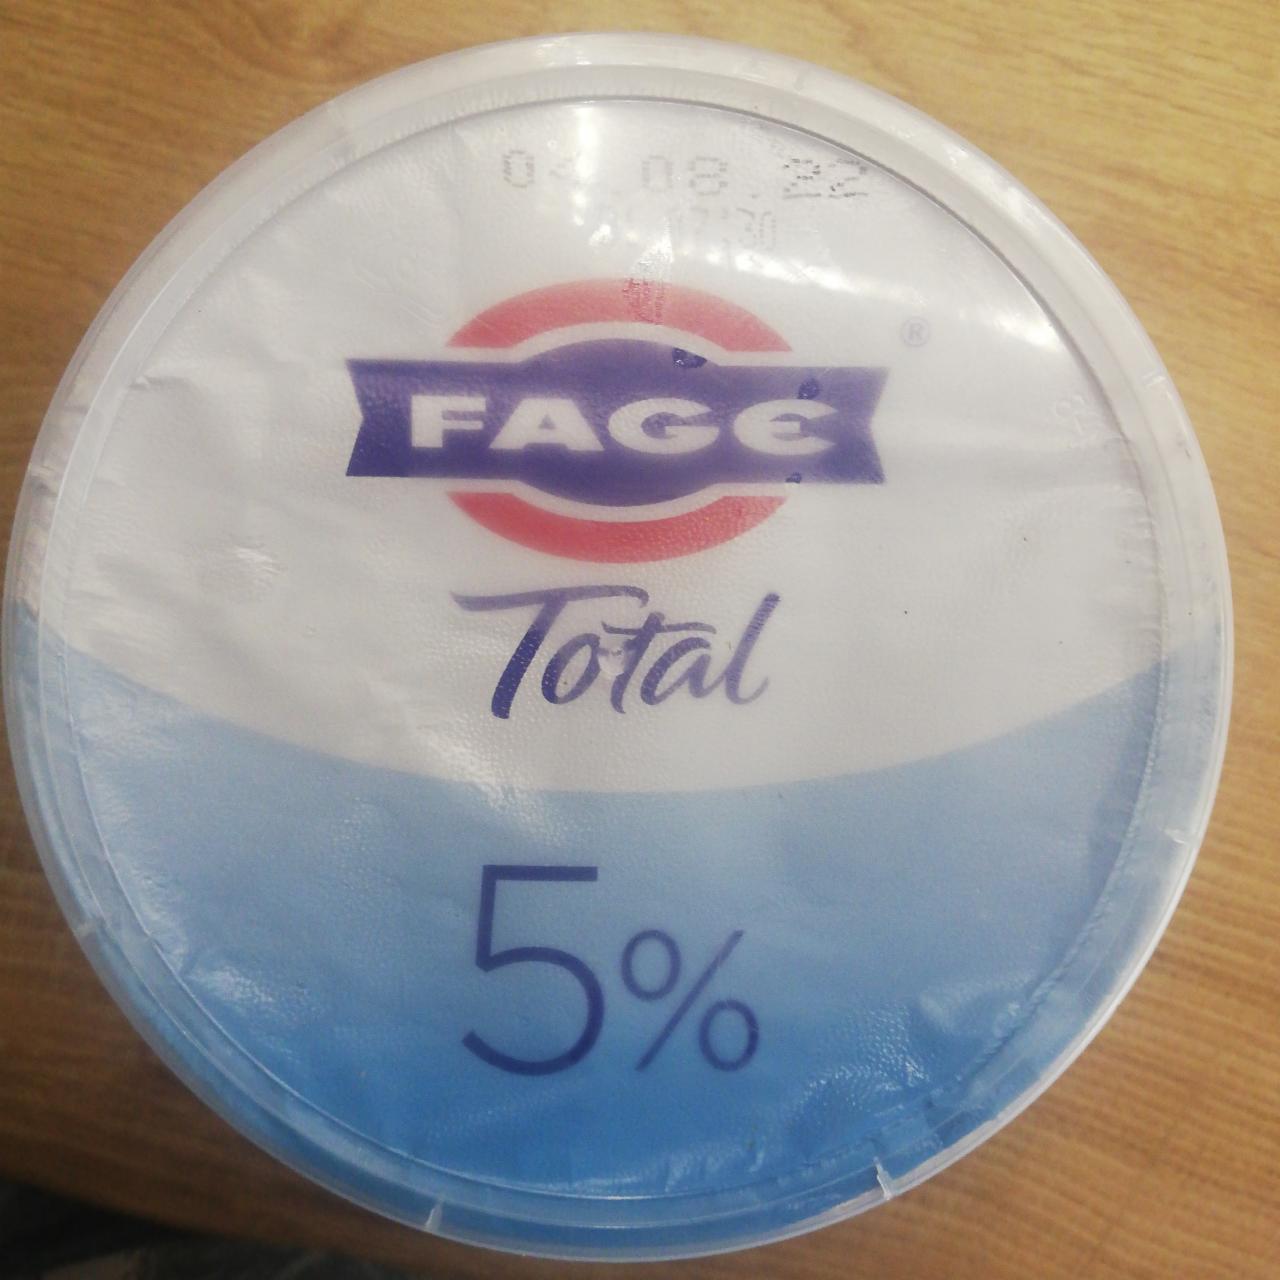 Фото - Total 5% fat Fage